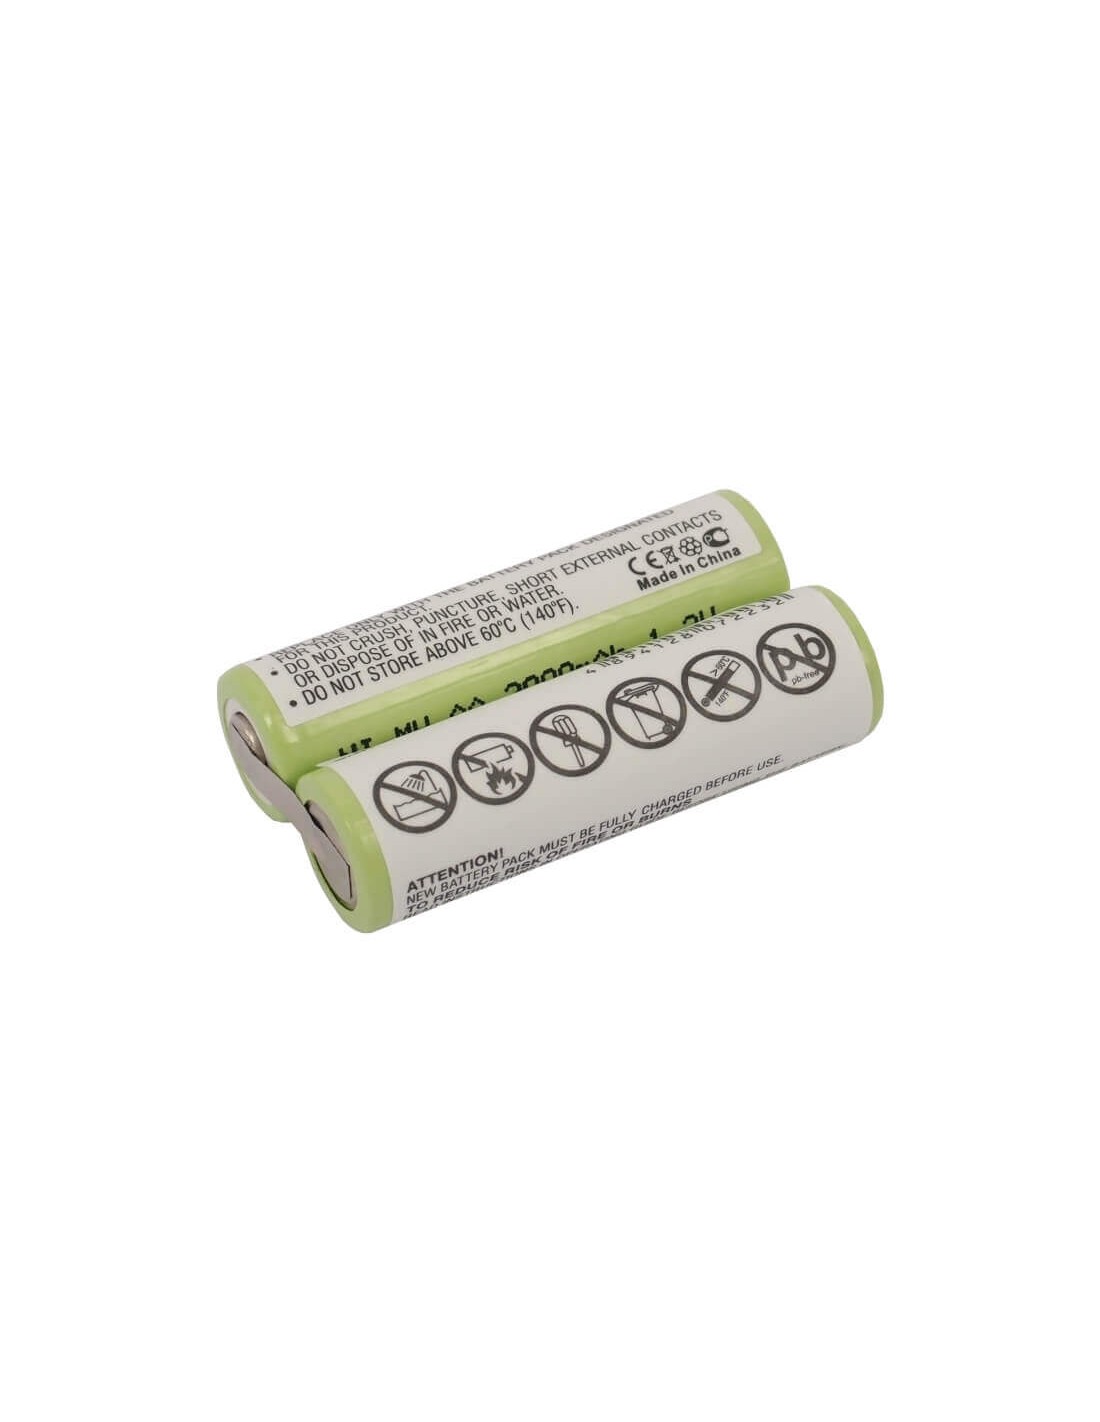 Battery for 3m Centrimed, Sarnes 9602 Surgical Clipper 2.4V, 2000mAh - 4.80Wh